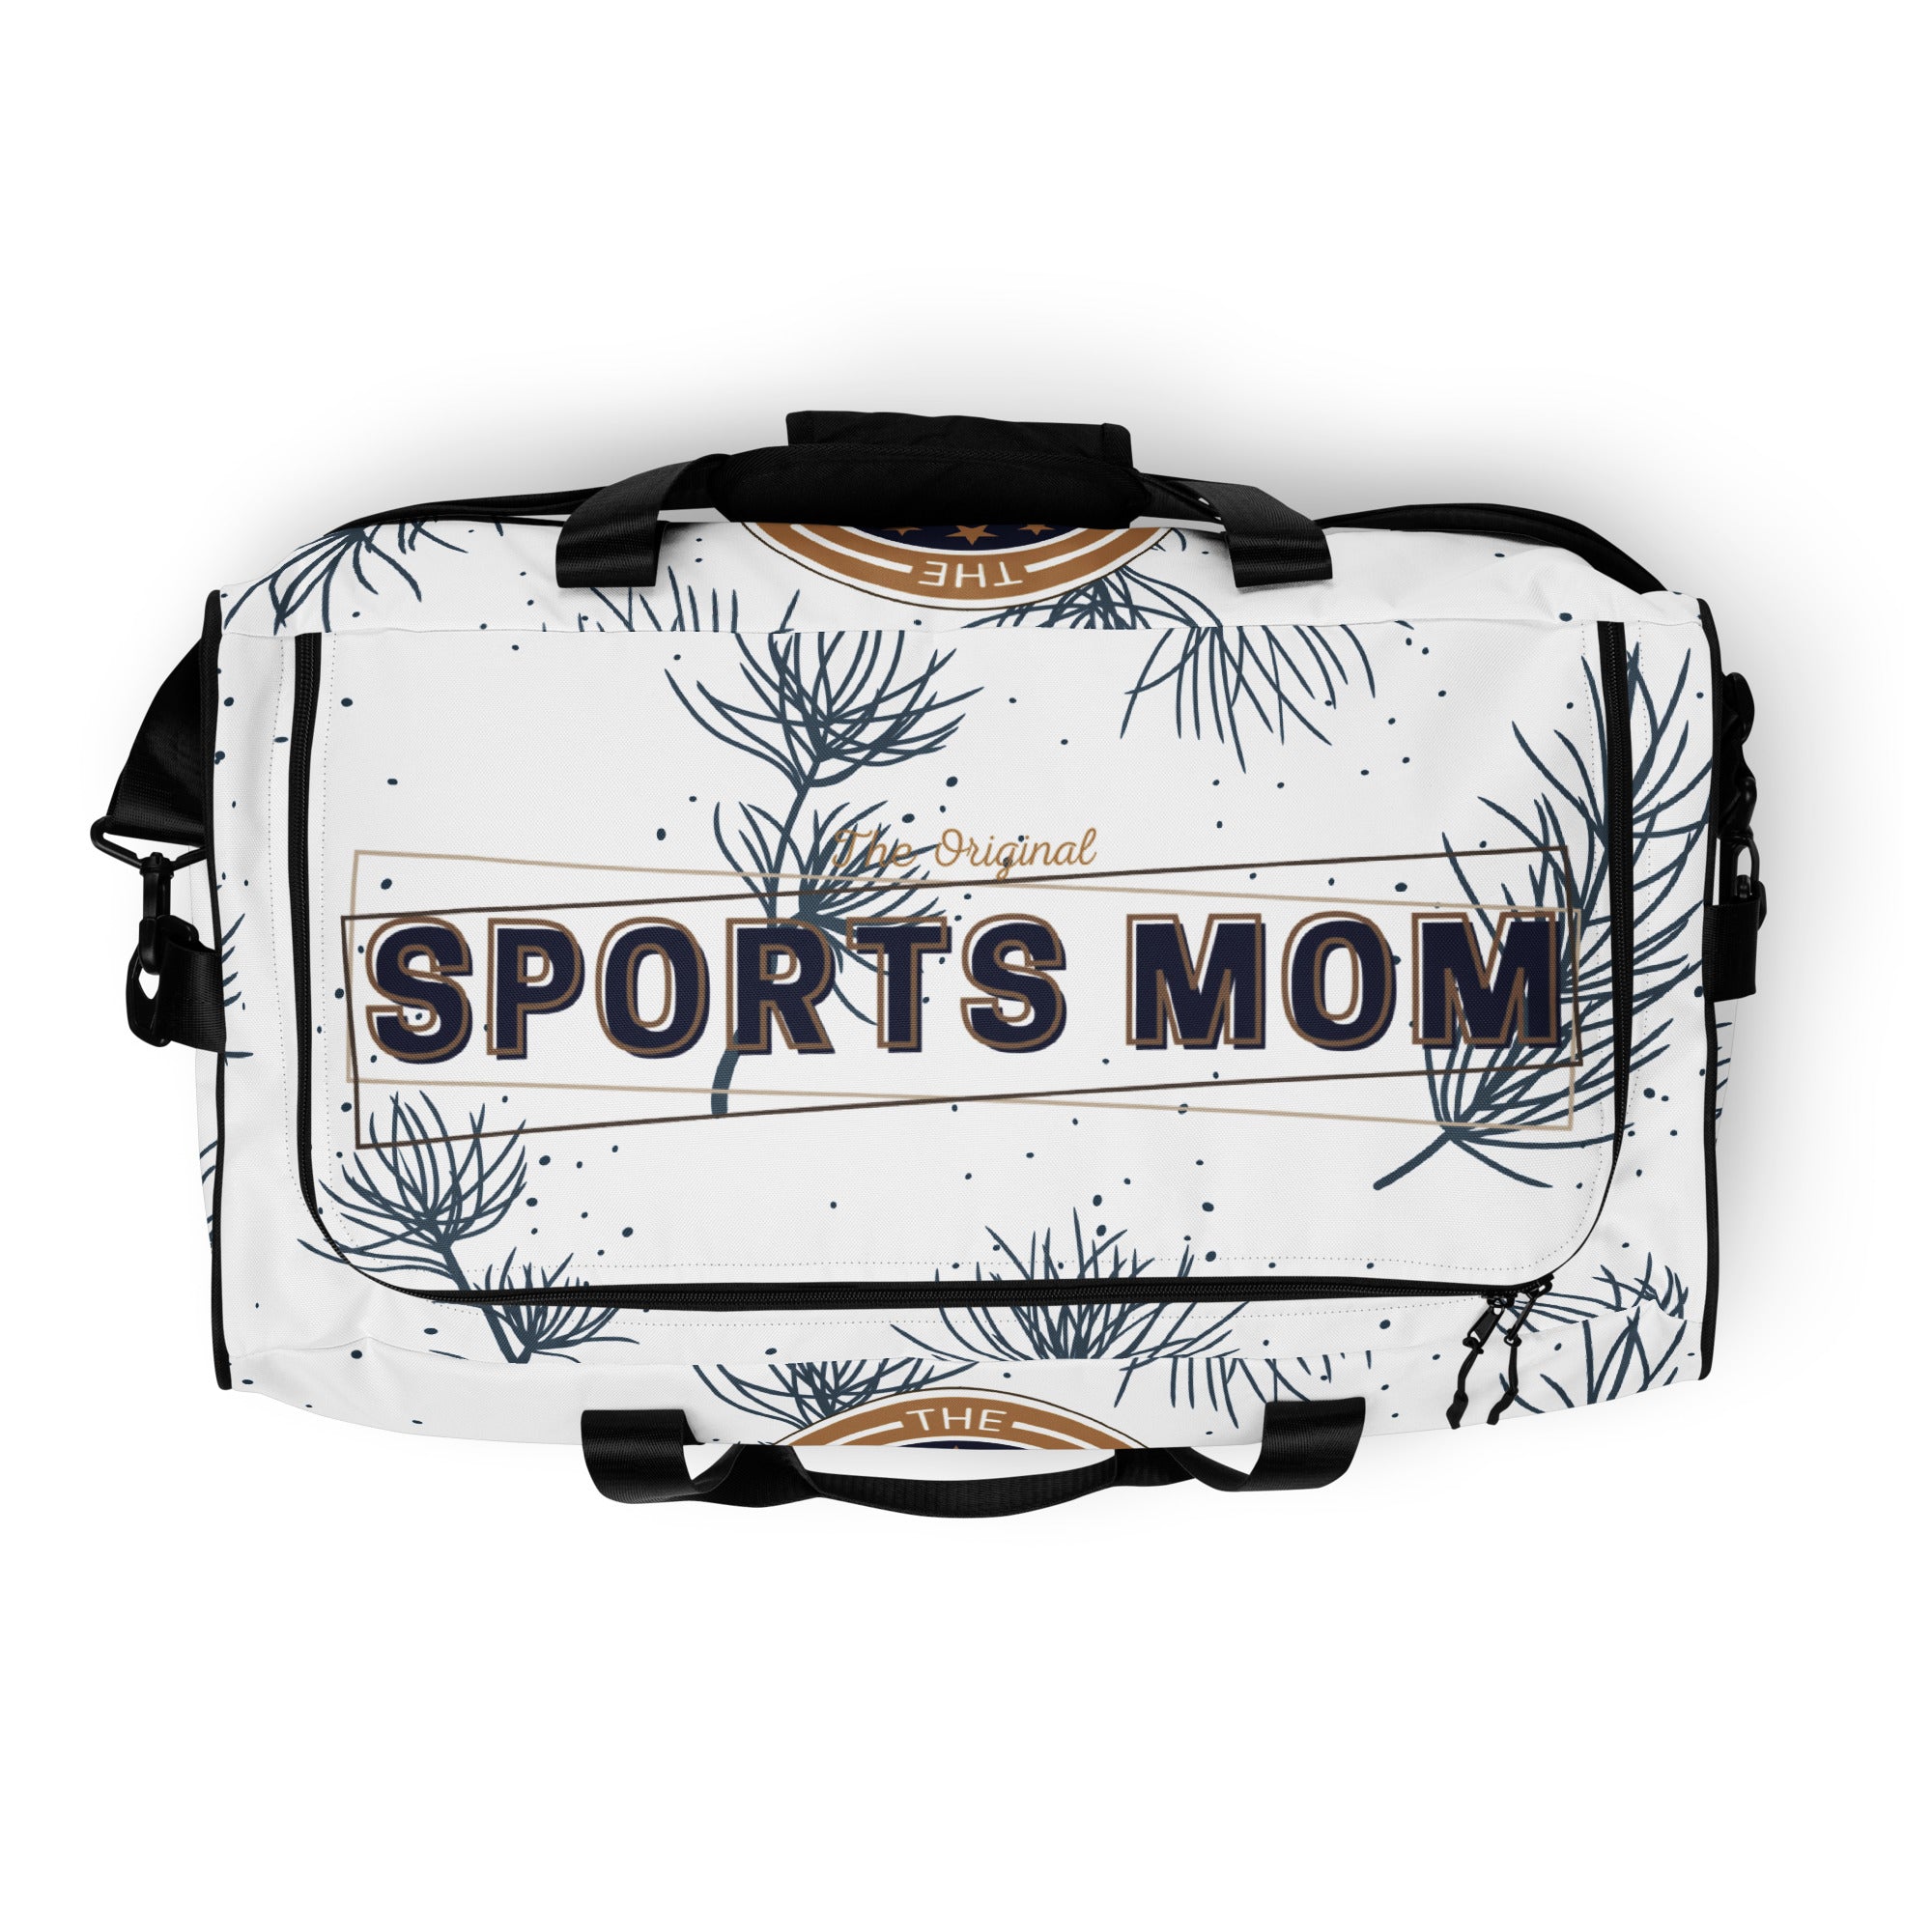 Sports Mom - Away Game - Ultimate Duffle Bag - Pine Needles